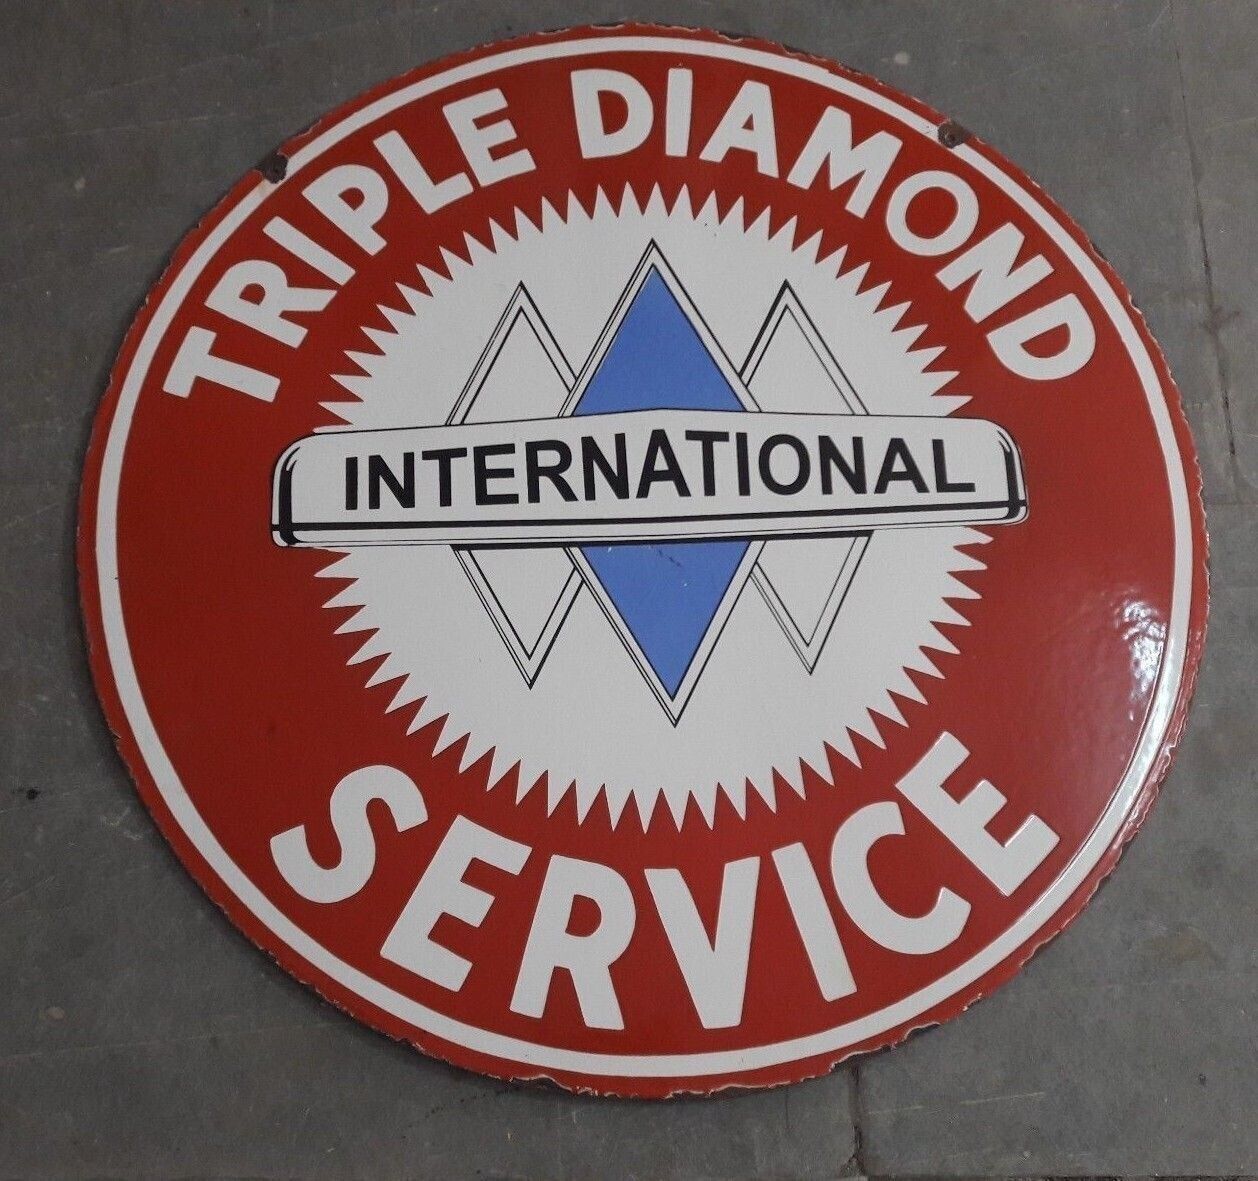 PORCELIAN TRIPLE DIAMOND ENAMEL SIGN SIZE 30X30 INCHES DOUBLE SIDED